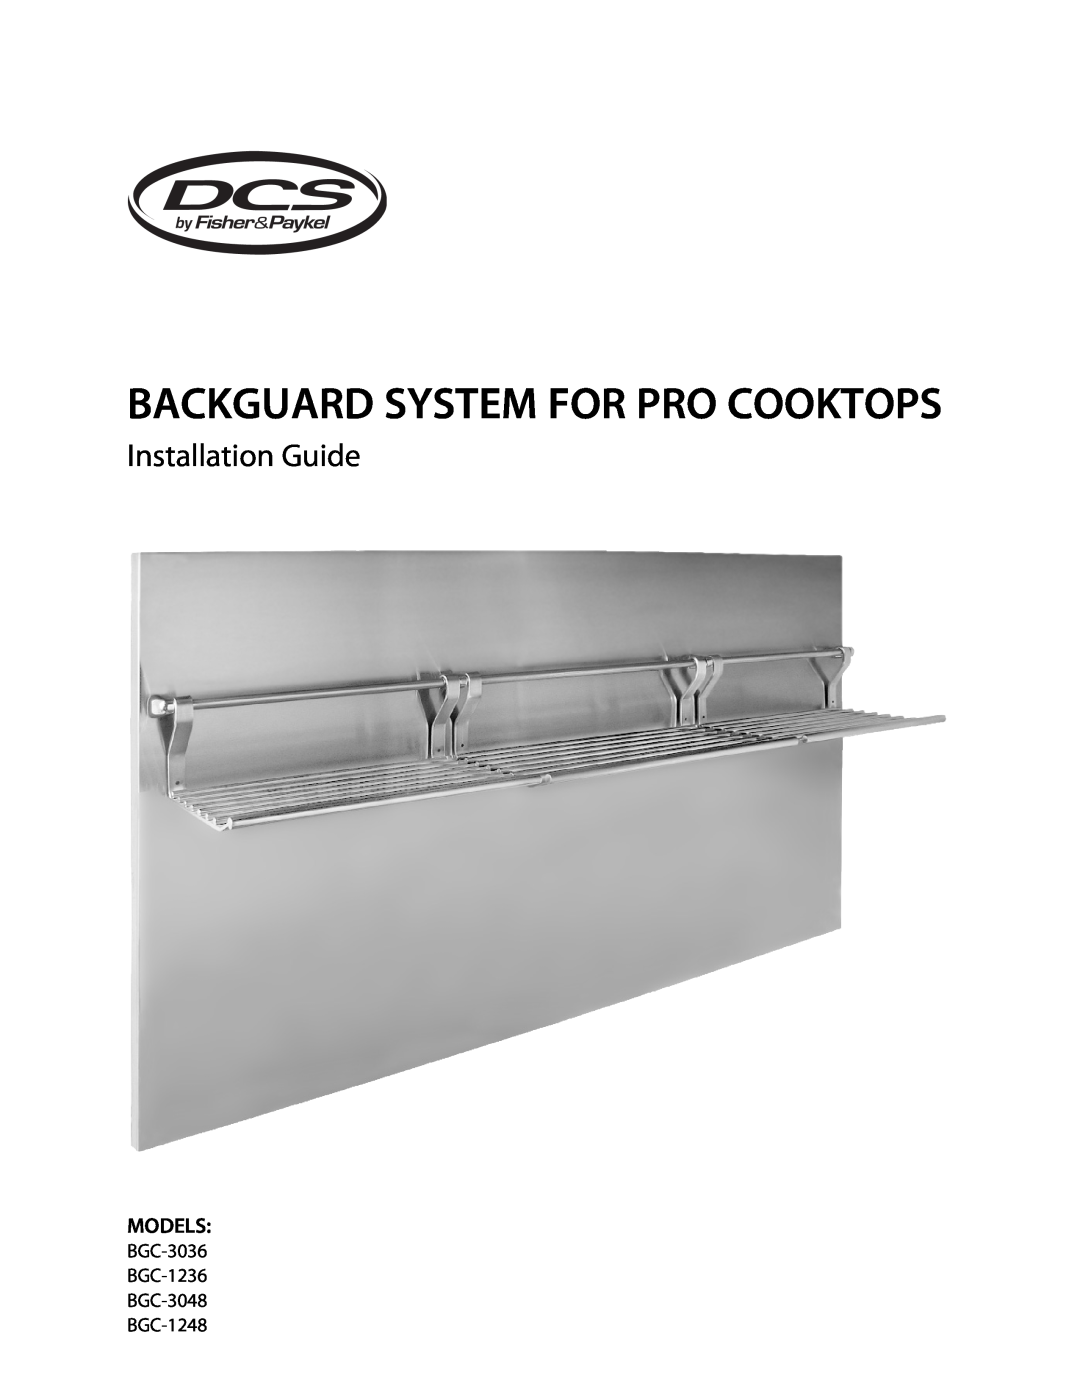 DCS manual Backguard System For Pro Cooktops, Installation Guide, Models, BGC-3036 BGC-1236 BGC-3048 BGC-1248 